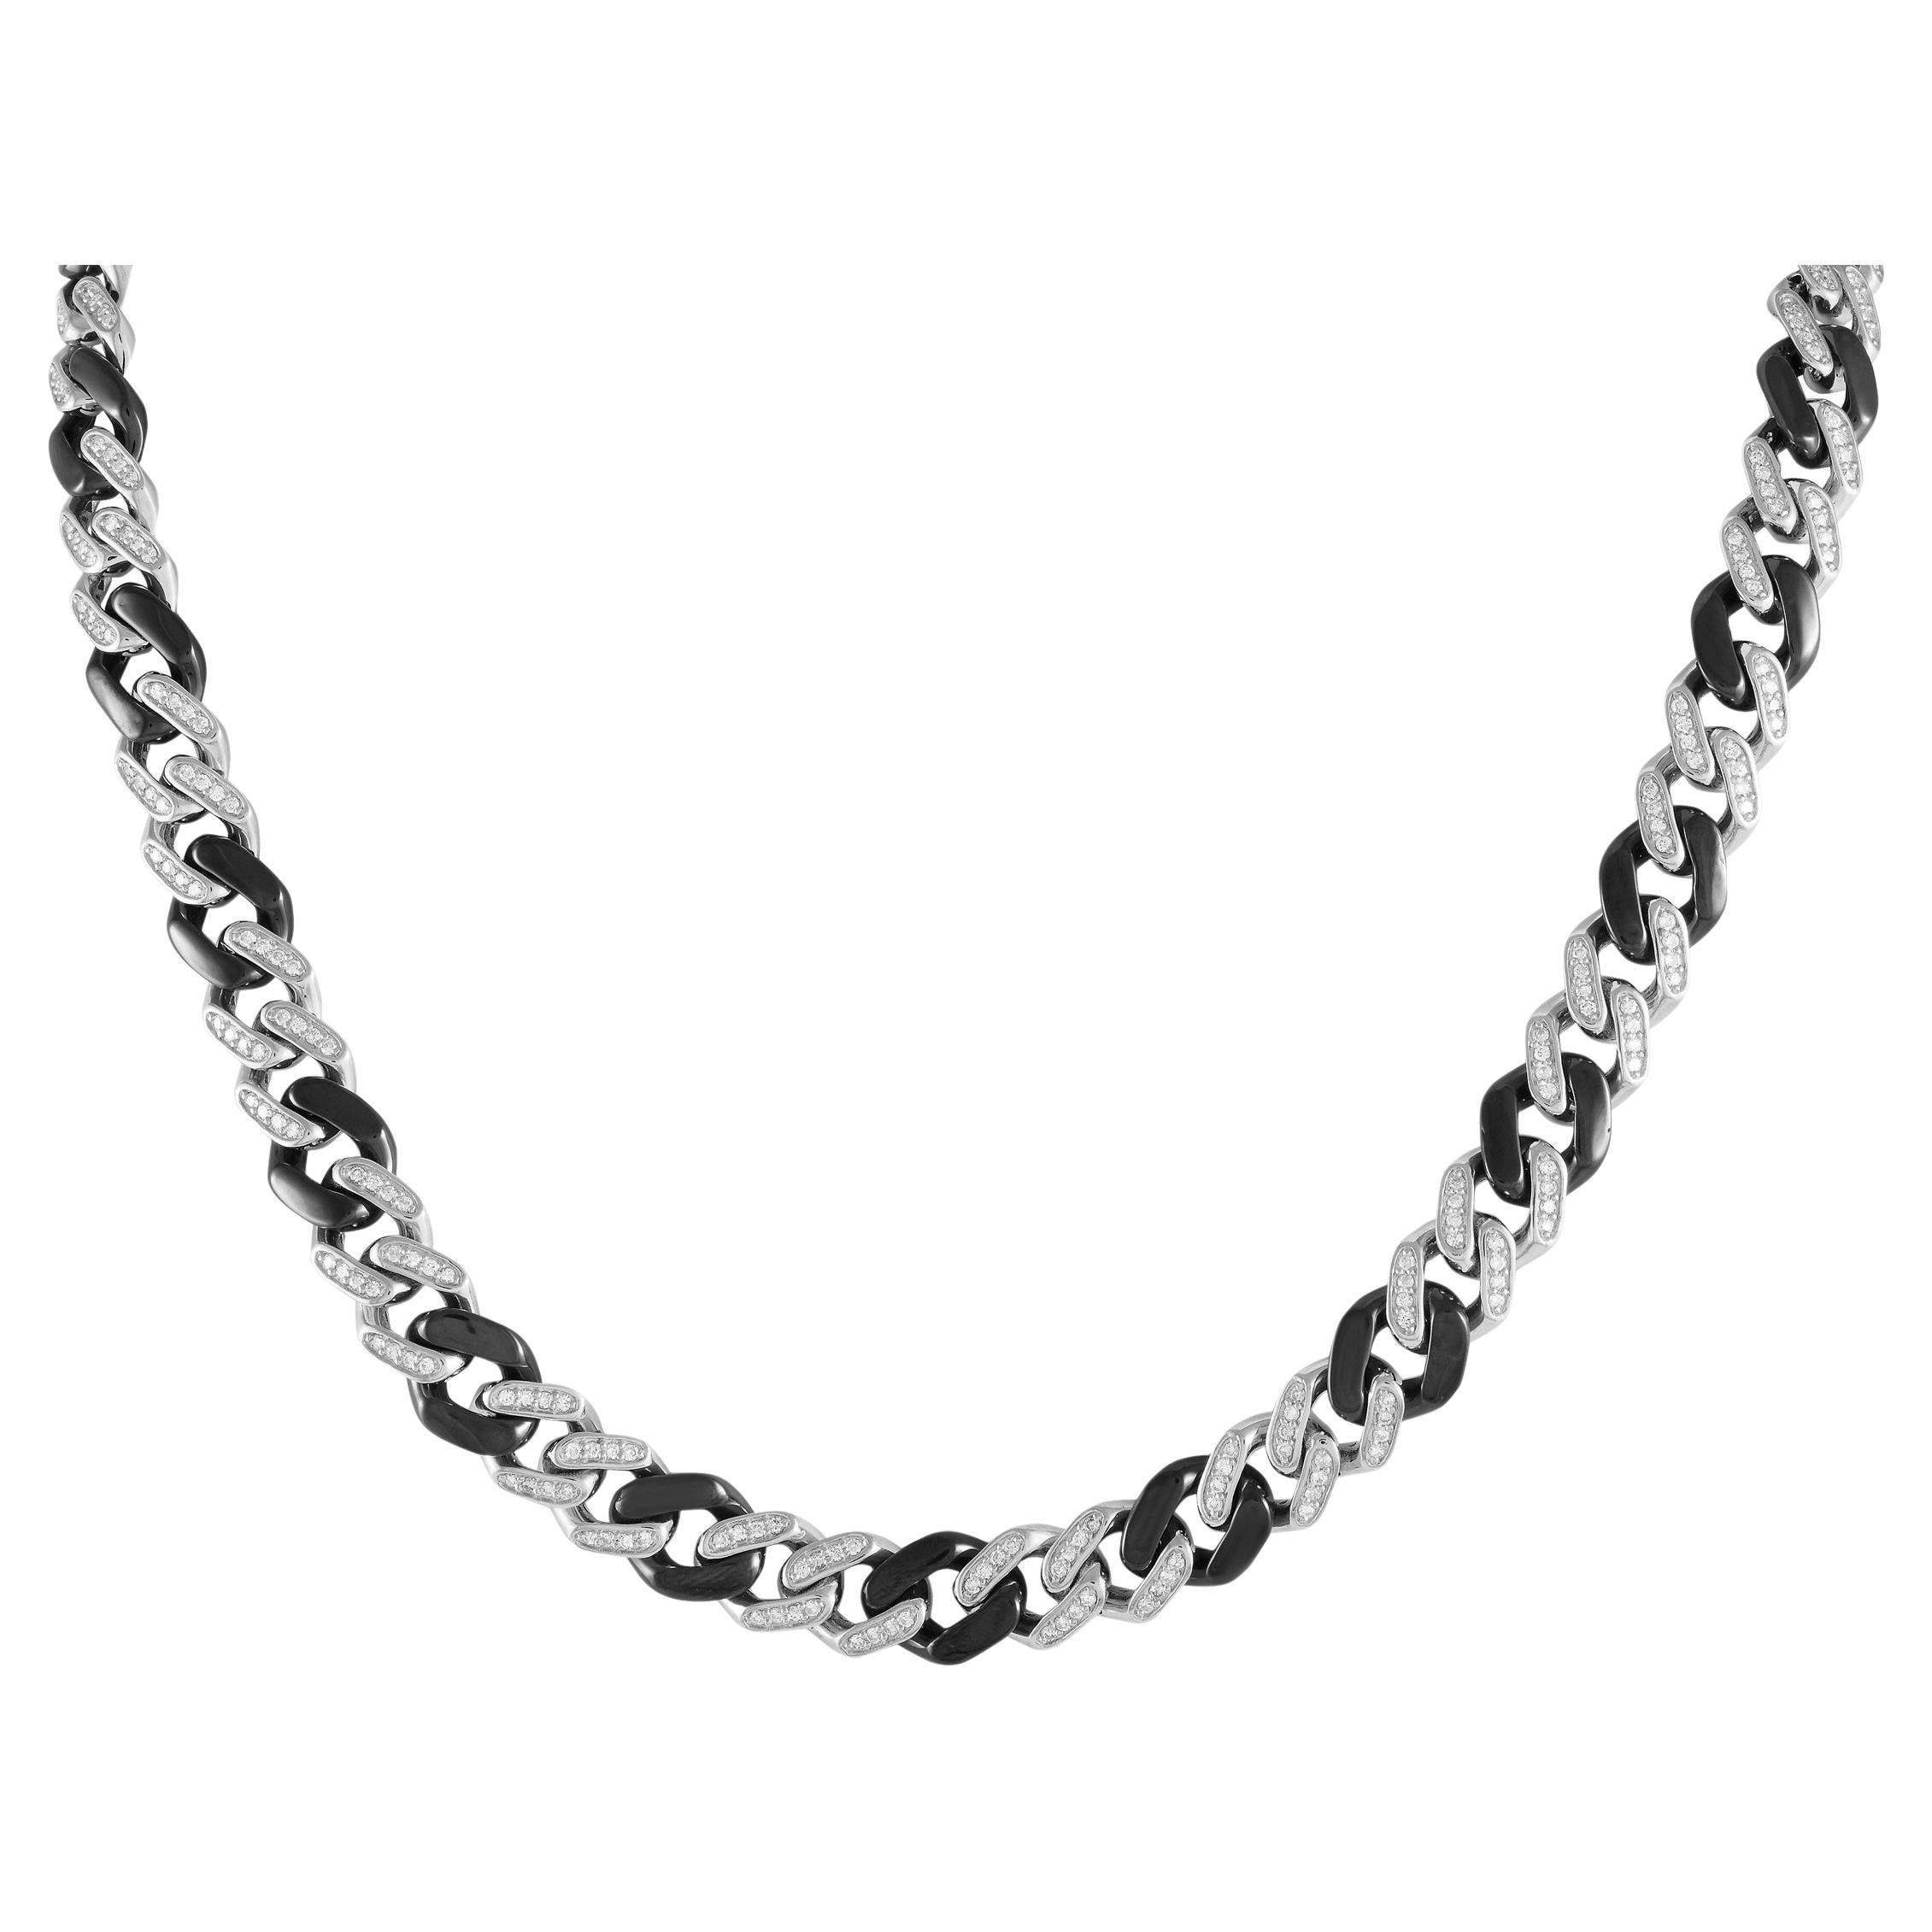 LB Exclusive 18K White Gold 2.75ct Diamond Black Curb Chain Necklace